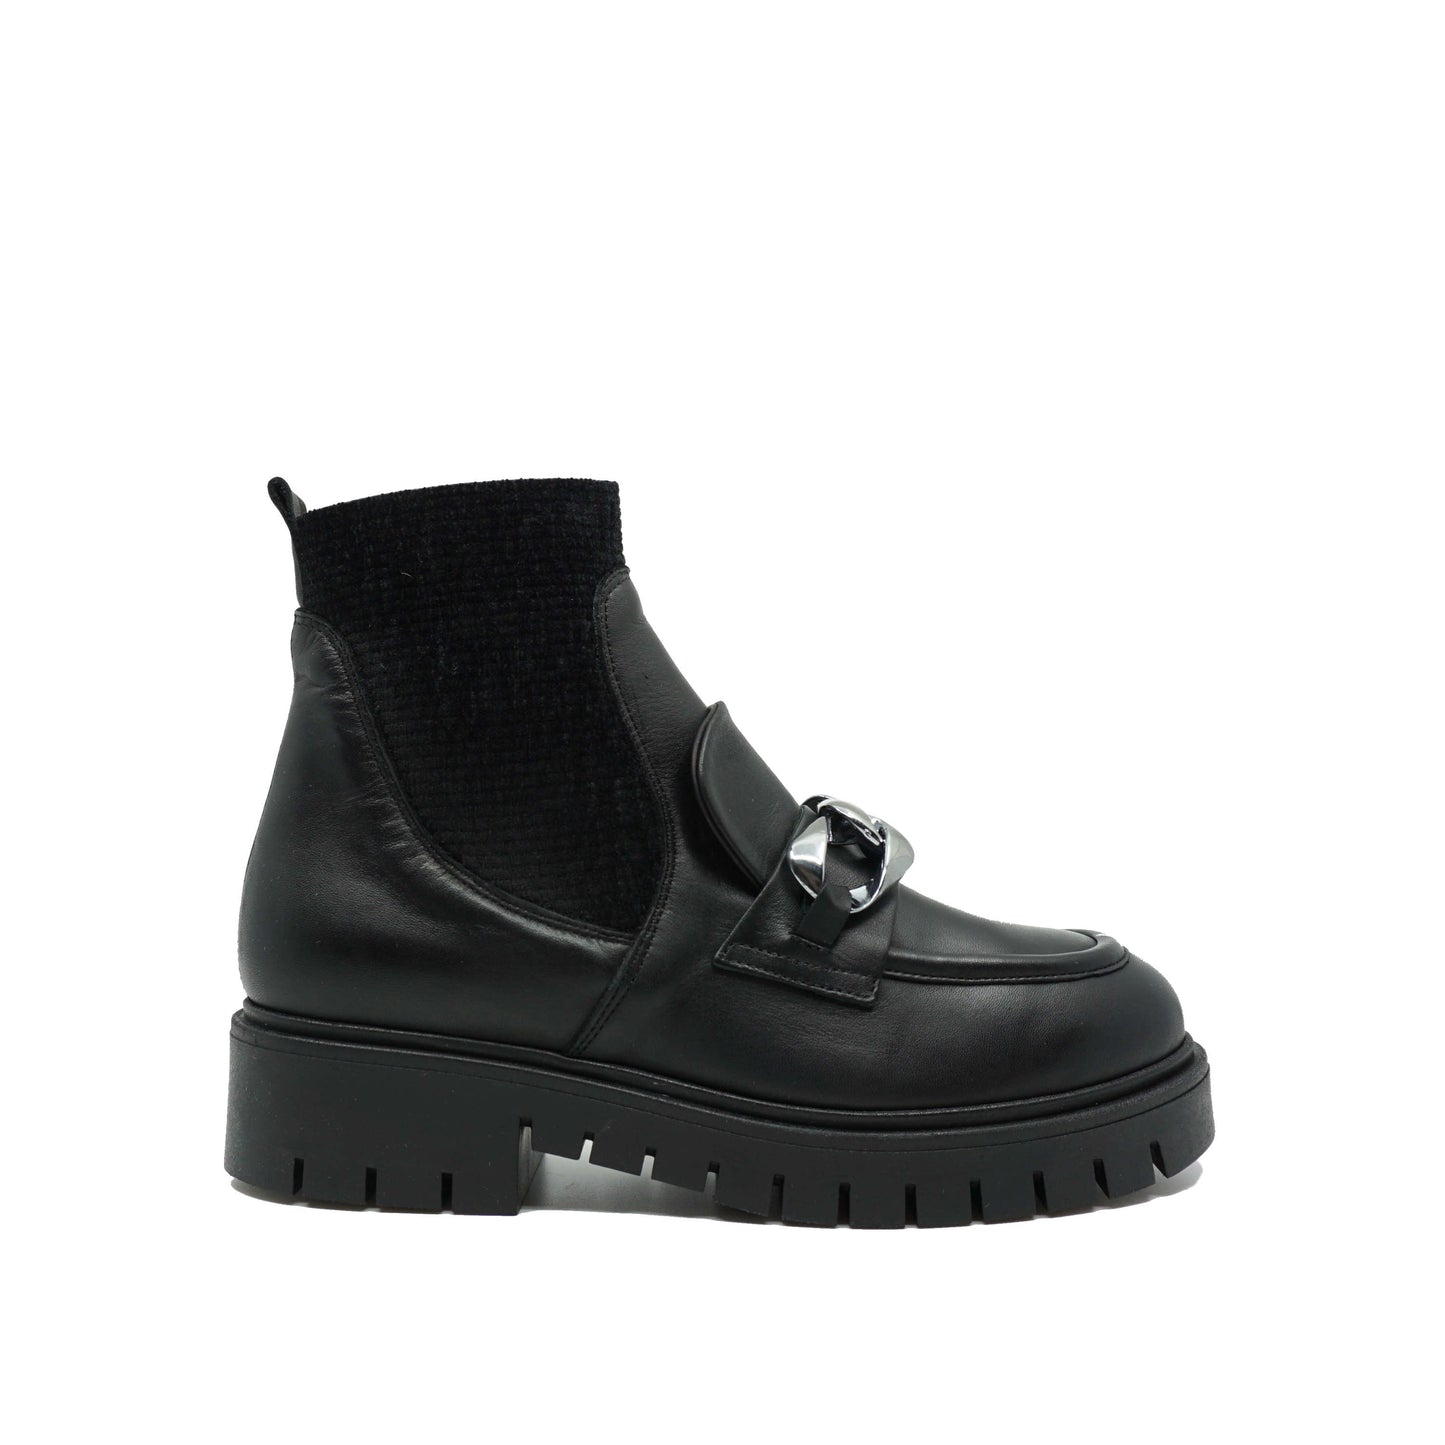 Hippe modieuze booties in zwart ledere met stoere profielzool en ketting detail op de schoen. 